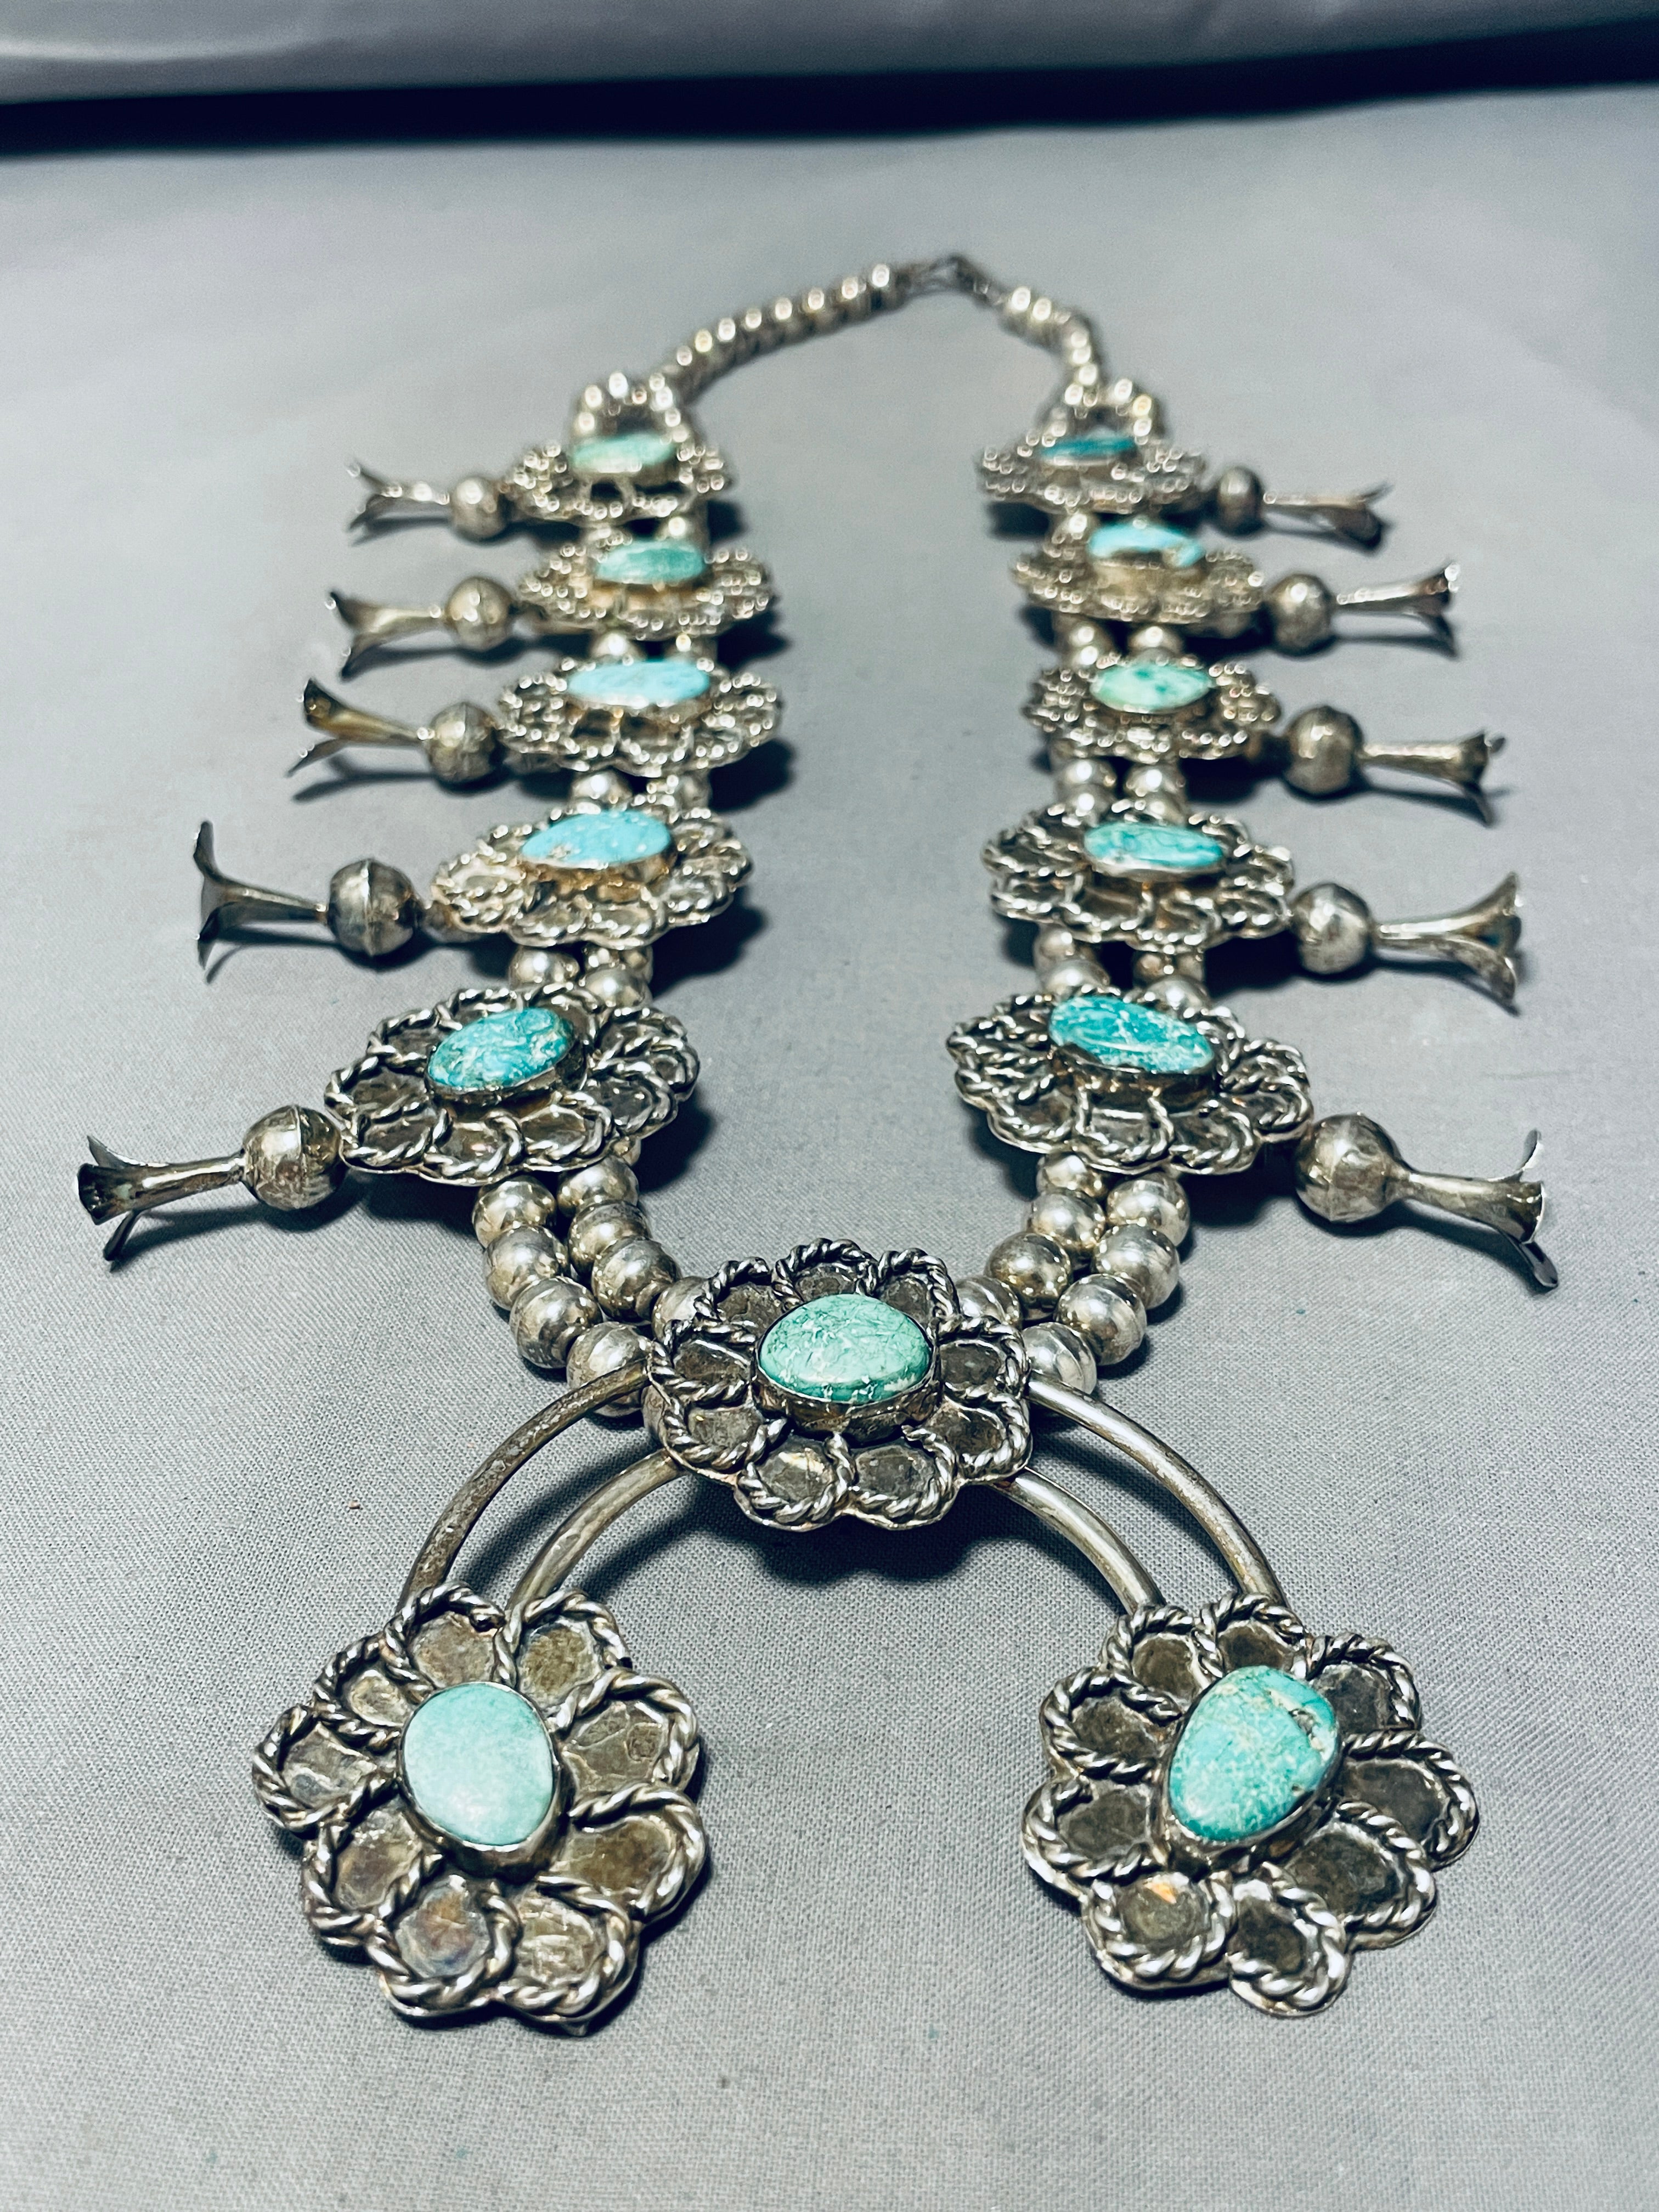 Vintage Navajo Turquoise & Sterling Squash Blossom Necklace | eBay